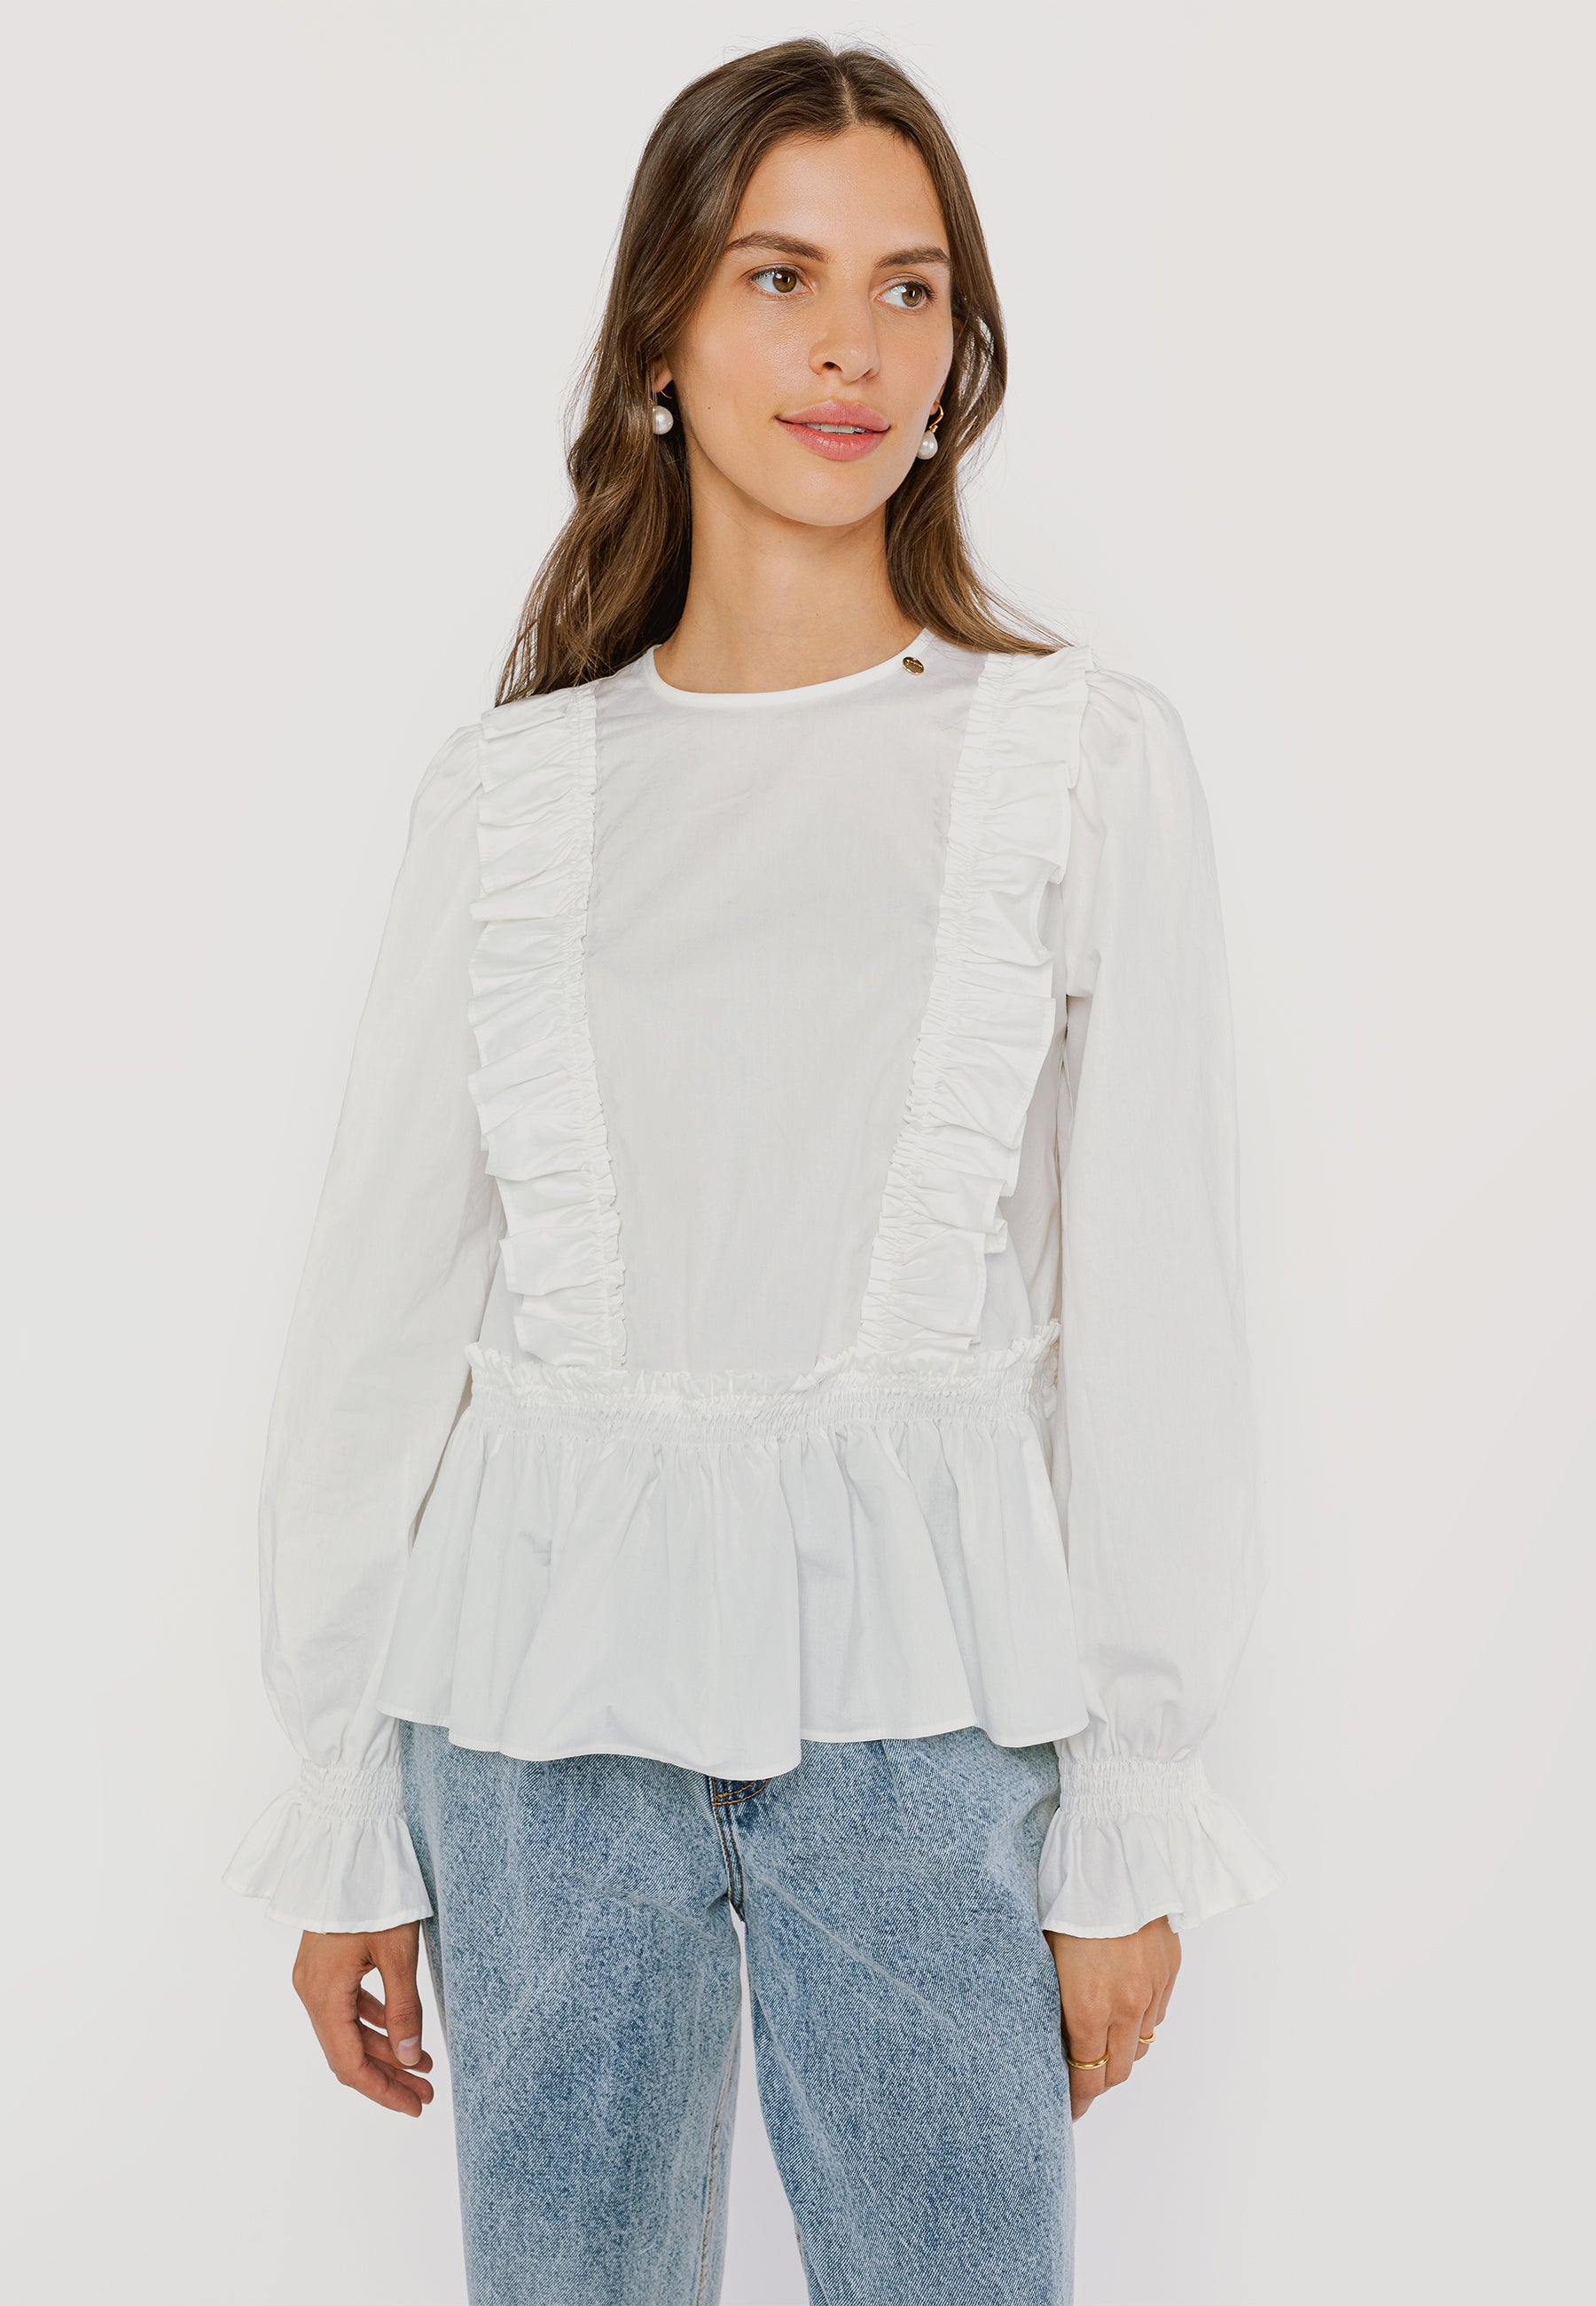 SOCRATA blouse with decorative ruffles, white